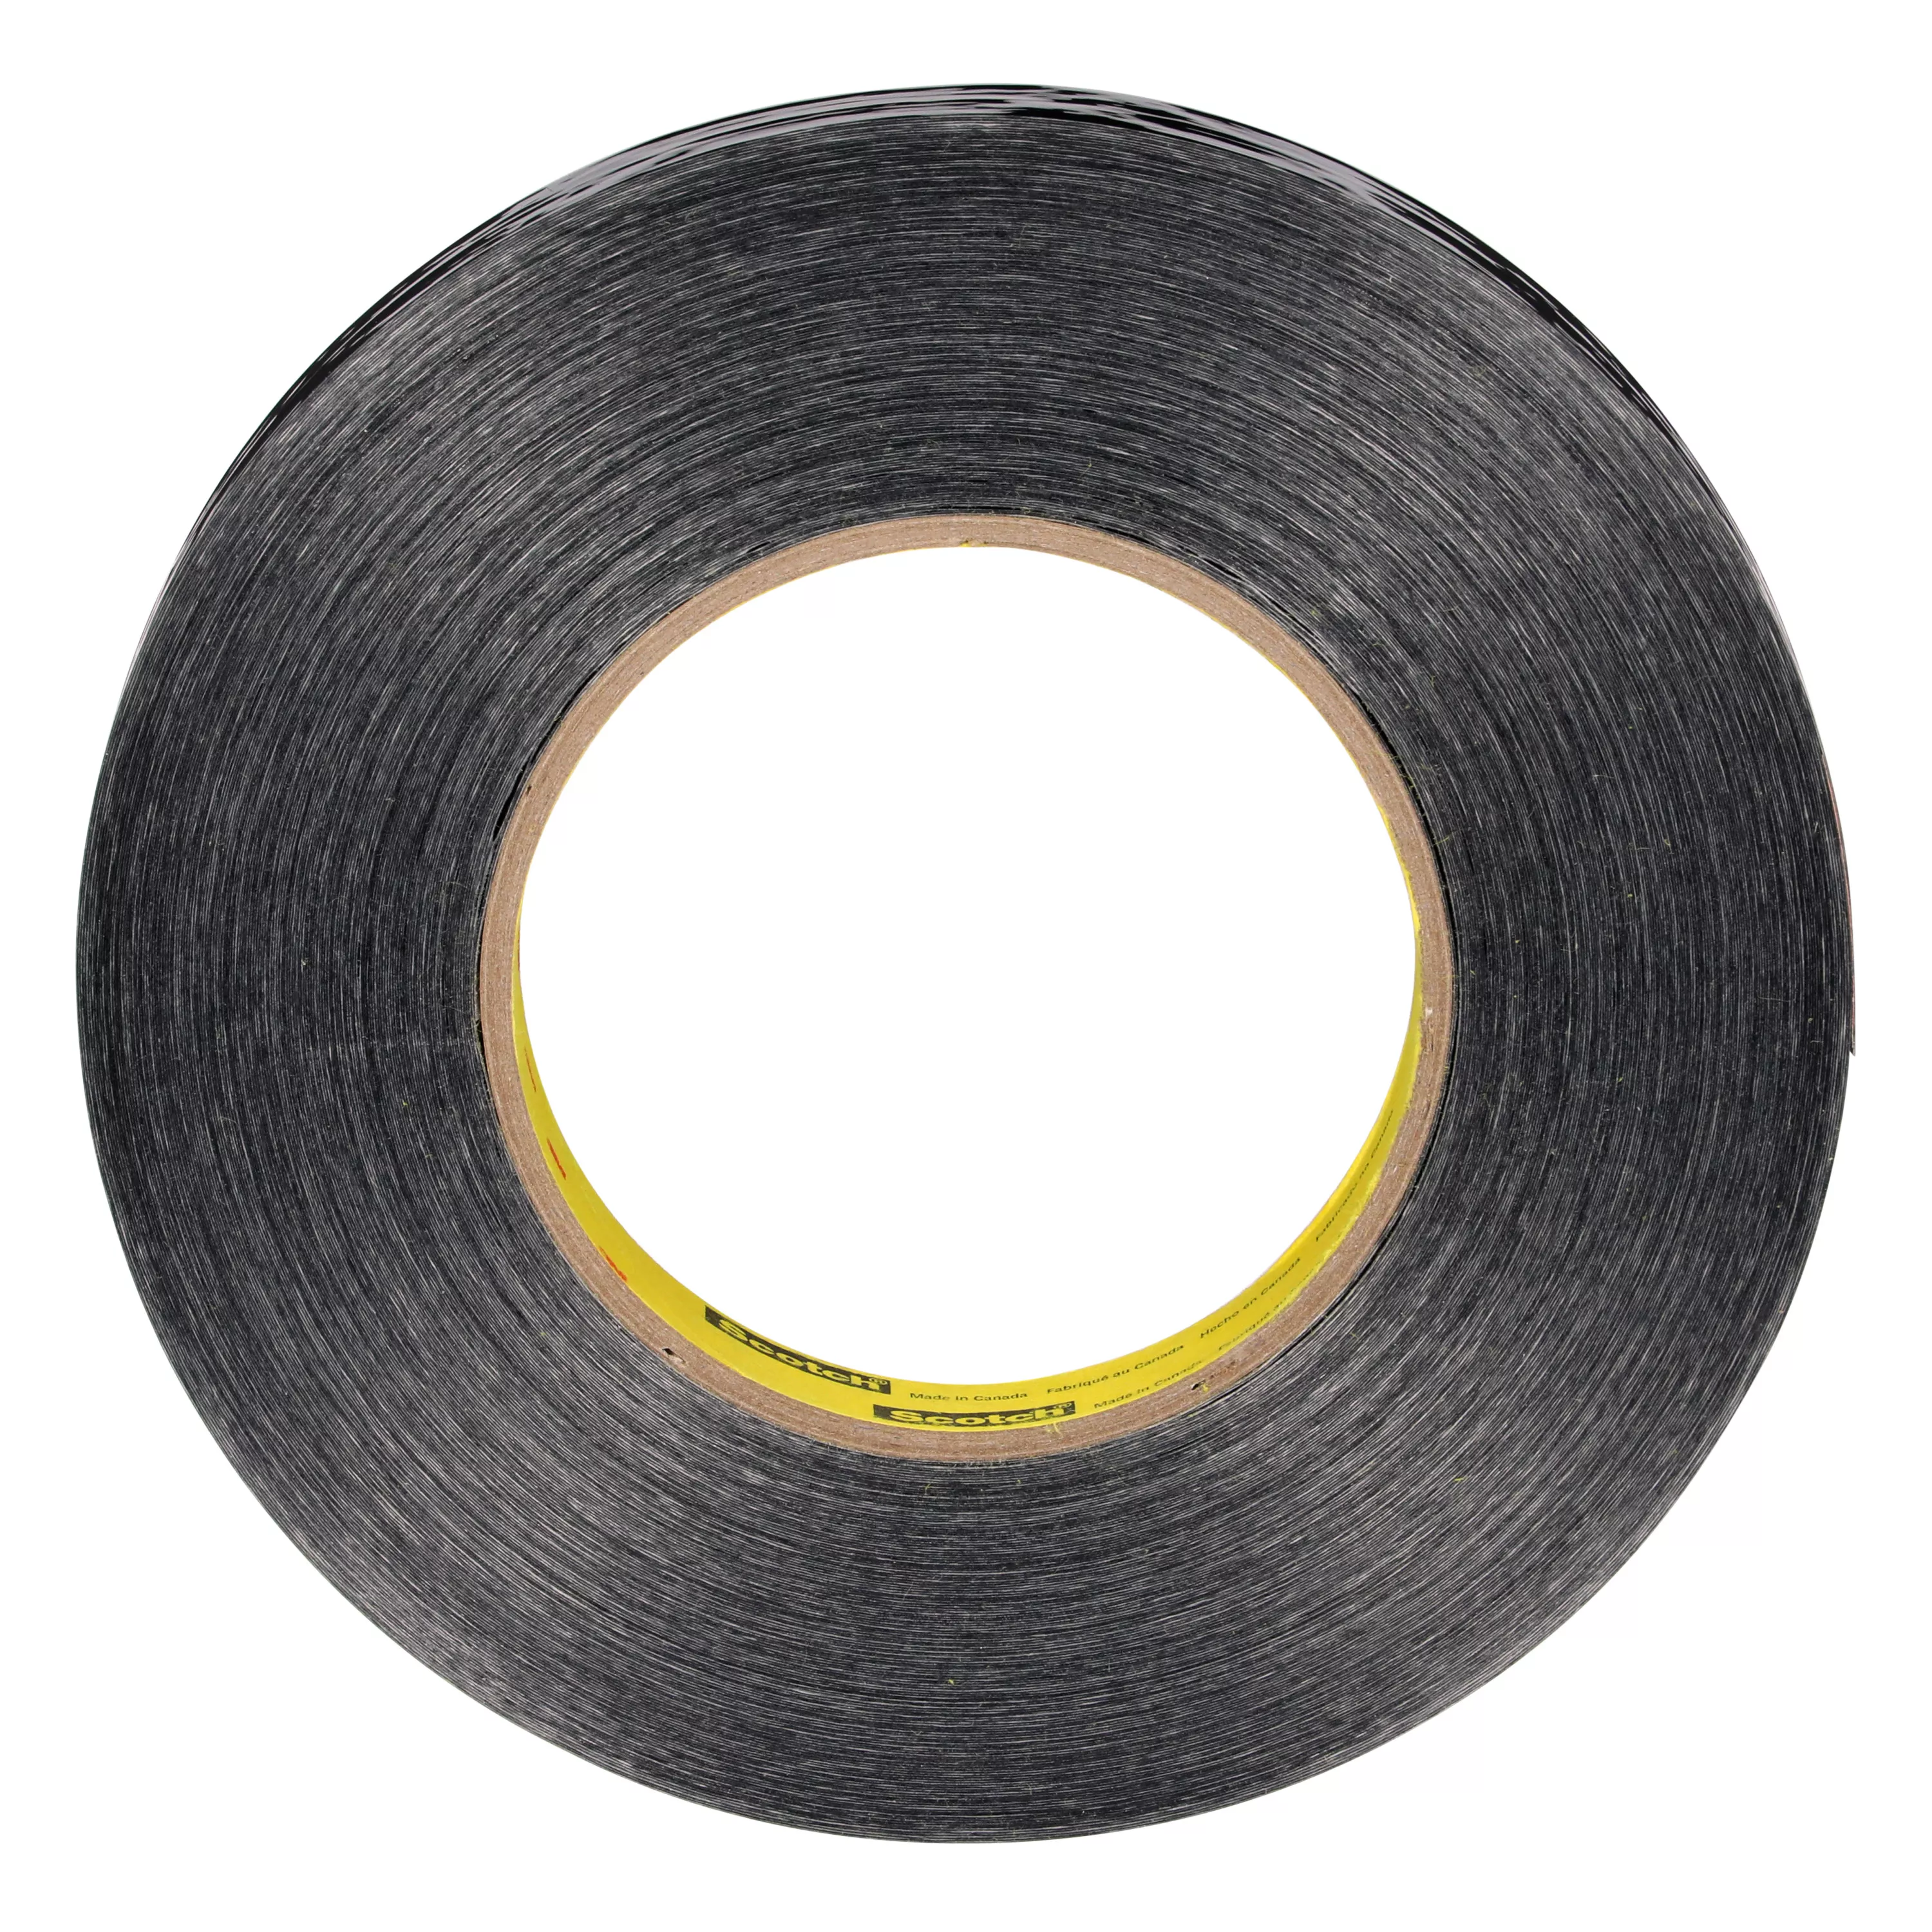 Product Number 890MSR | Scotch® Filament Tape 890MSR